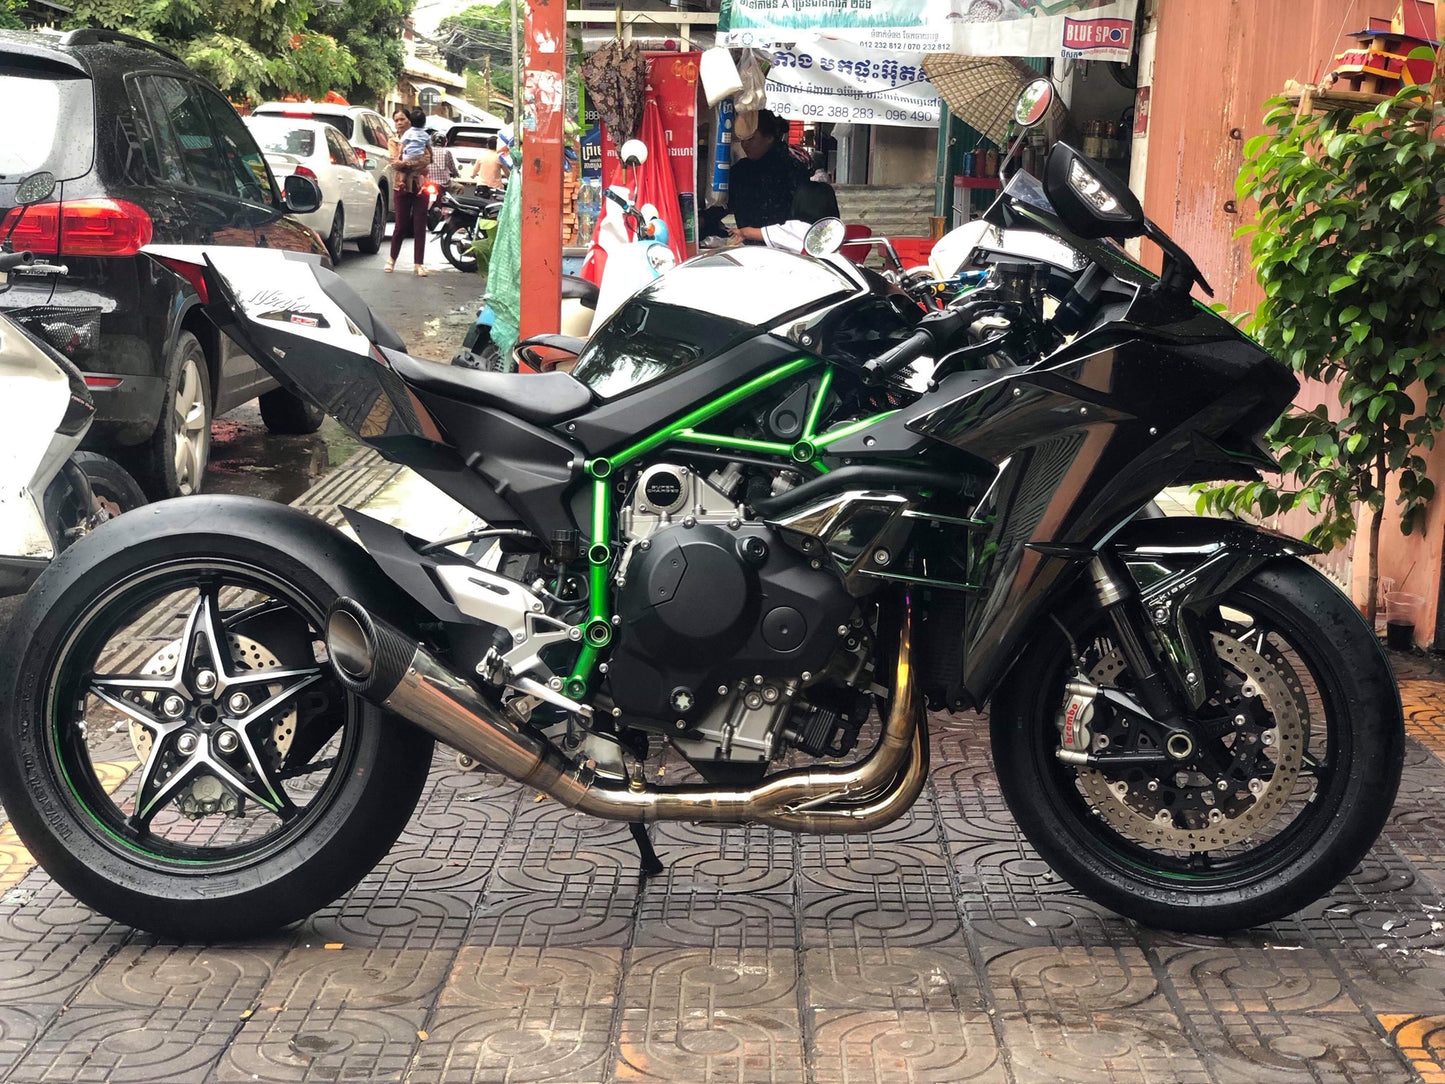 Kawasaki Ninja H2 & H2R Vandemon Brushed Titanium Exhaust & Carbon Tip Muffler